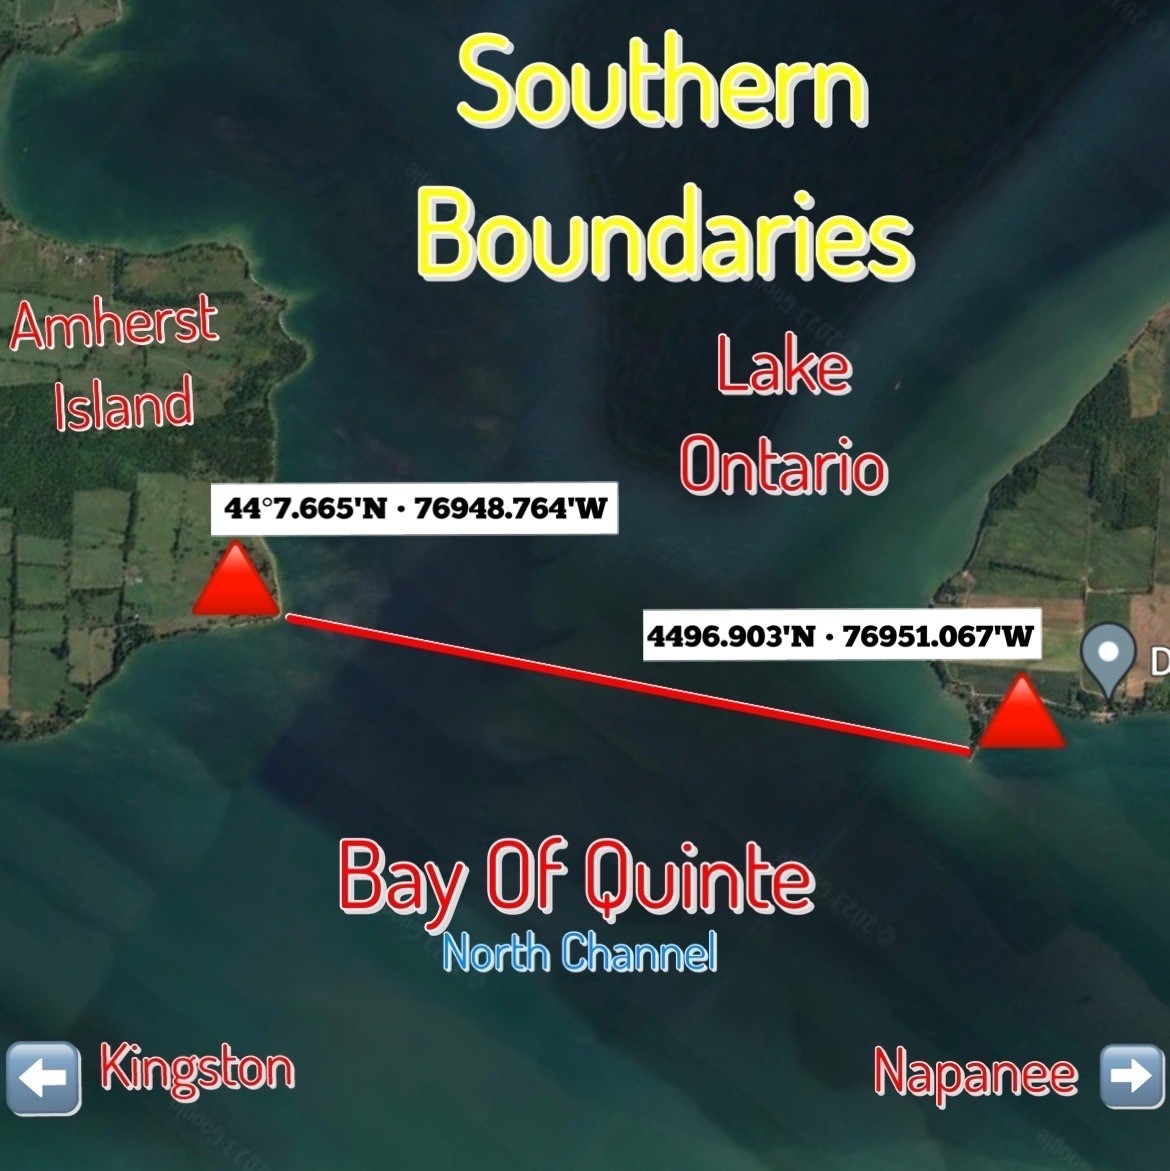 Southern Boundaries